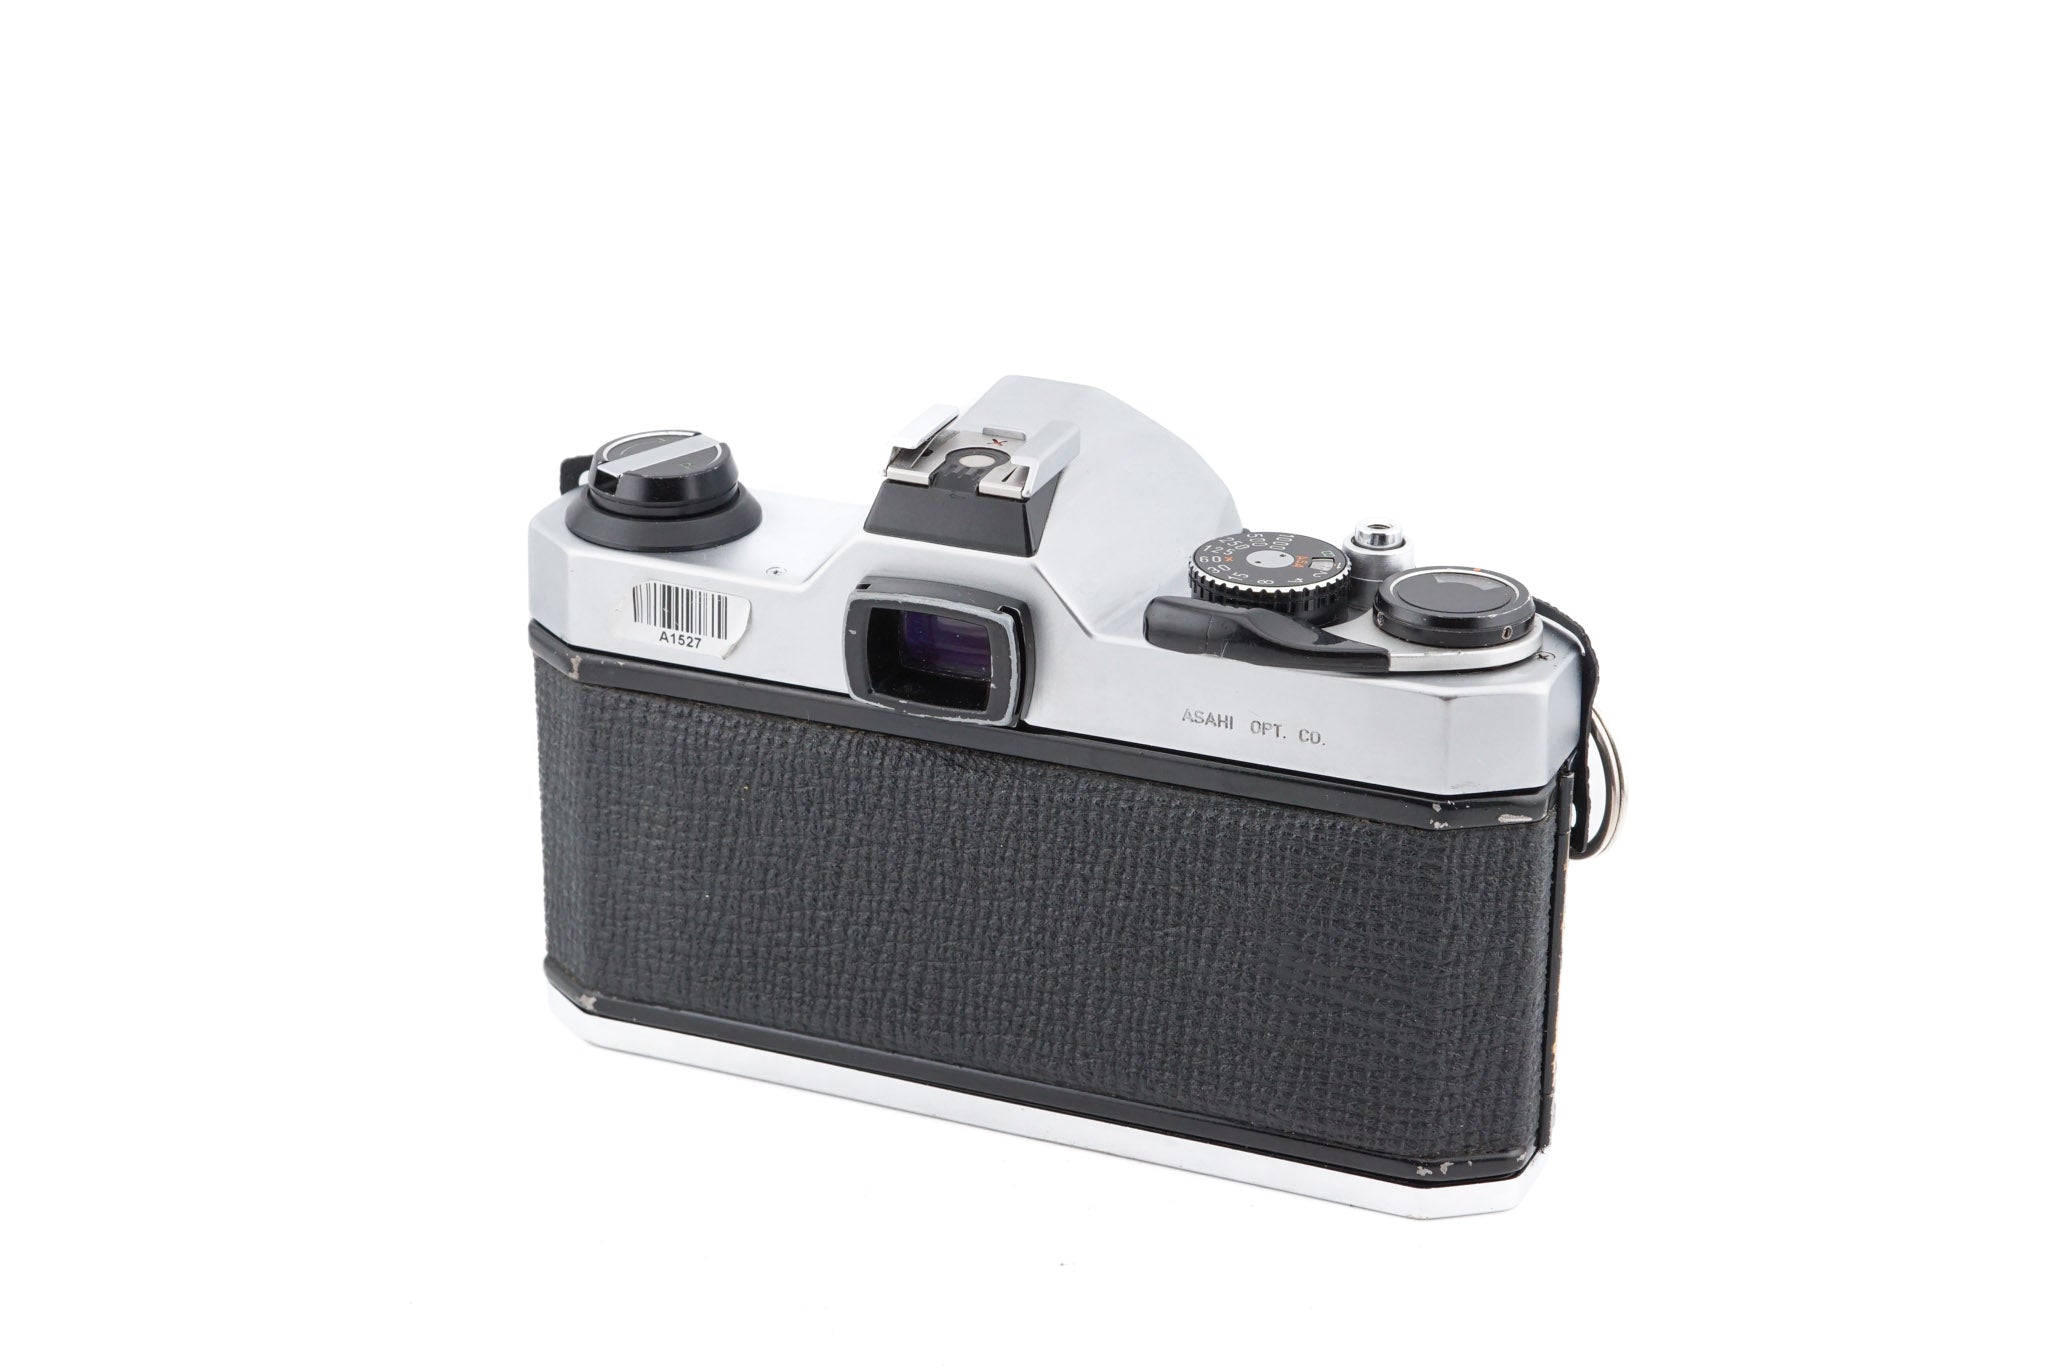 Pentax K1000 - 35mm Film Camera - with 6 month warranty